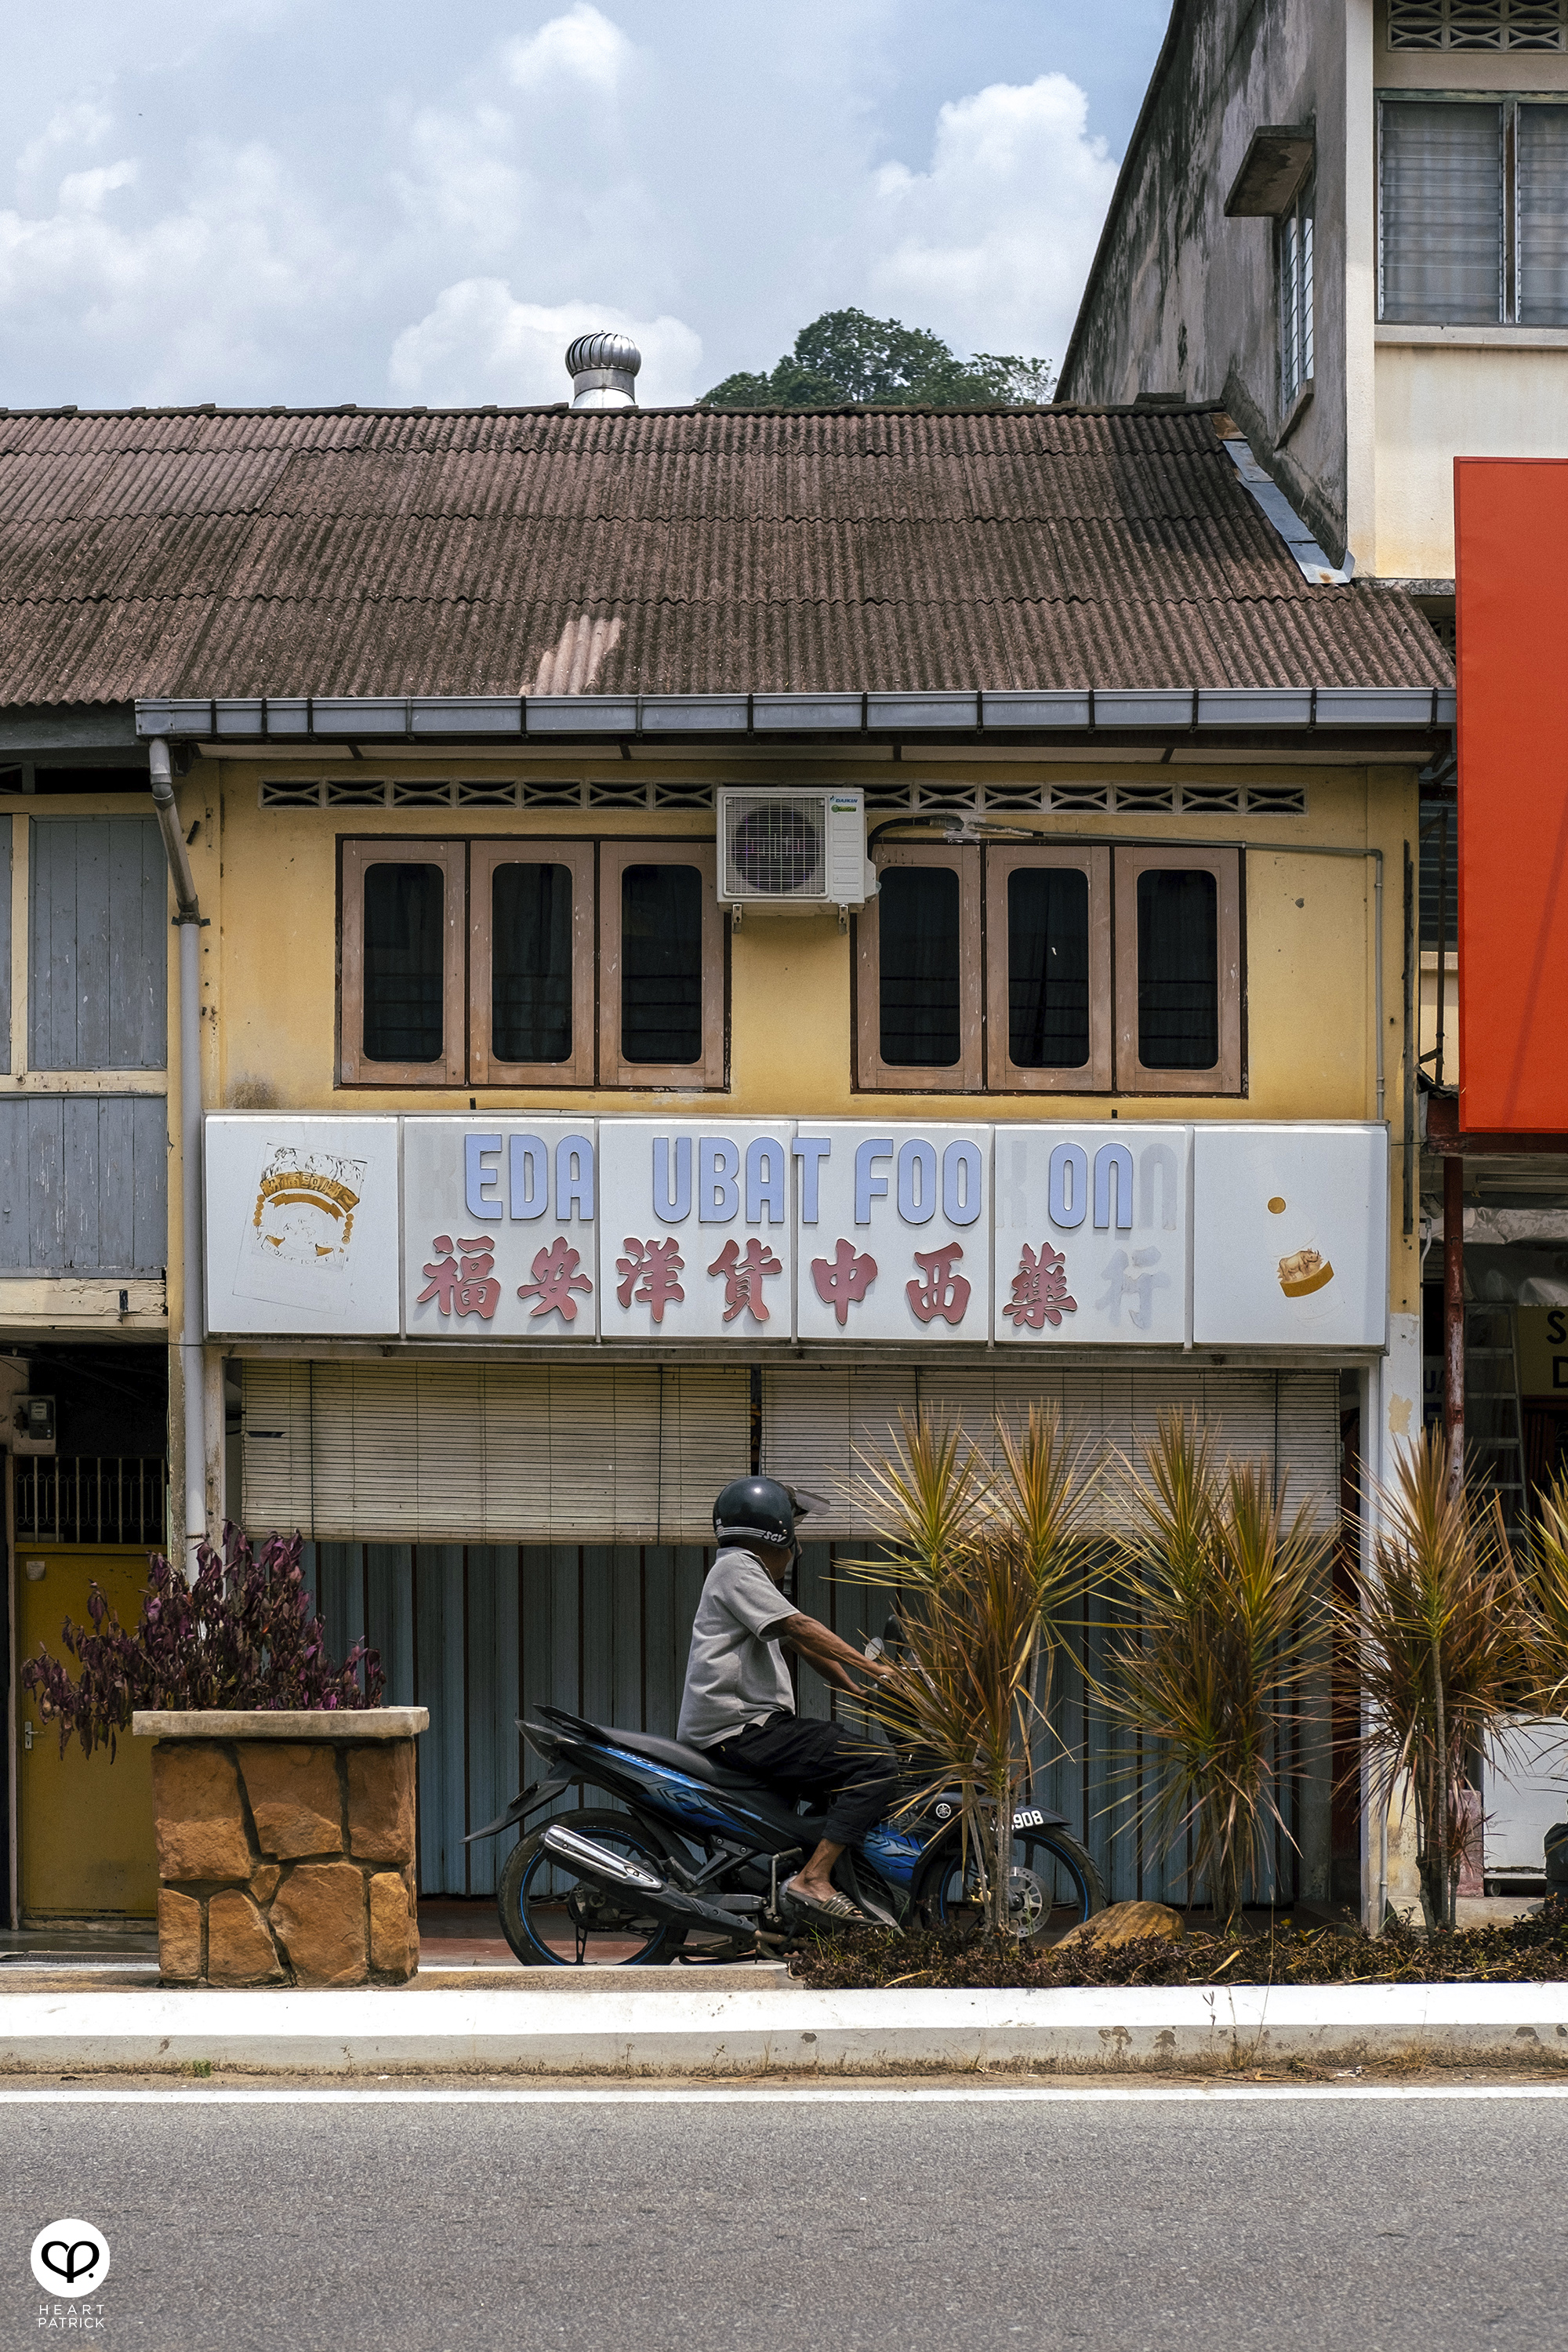 heartpatrick malaysia heritage lenggong perak street photography